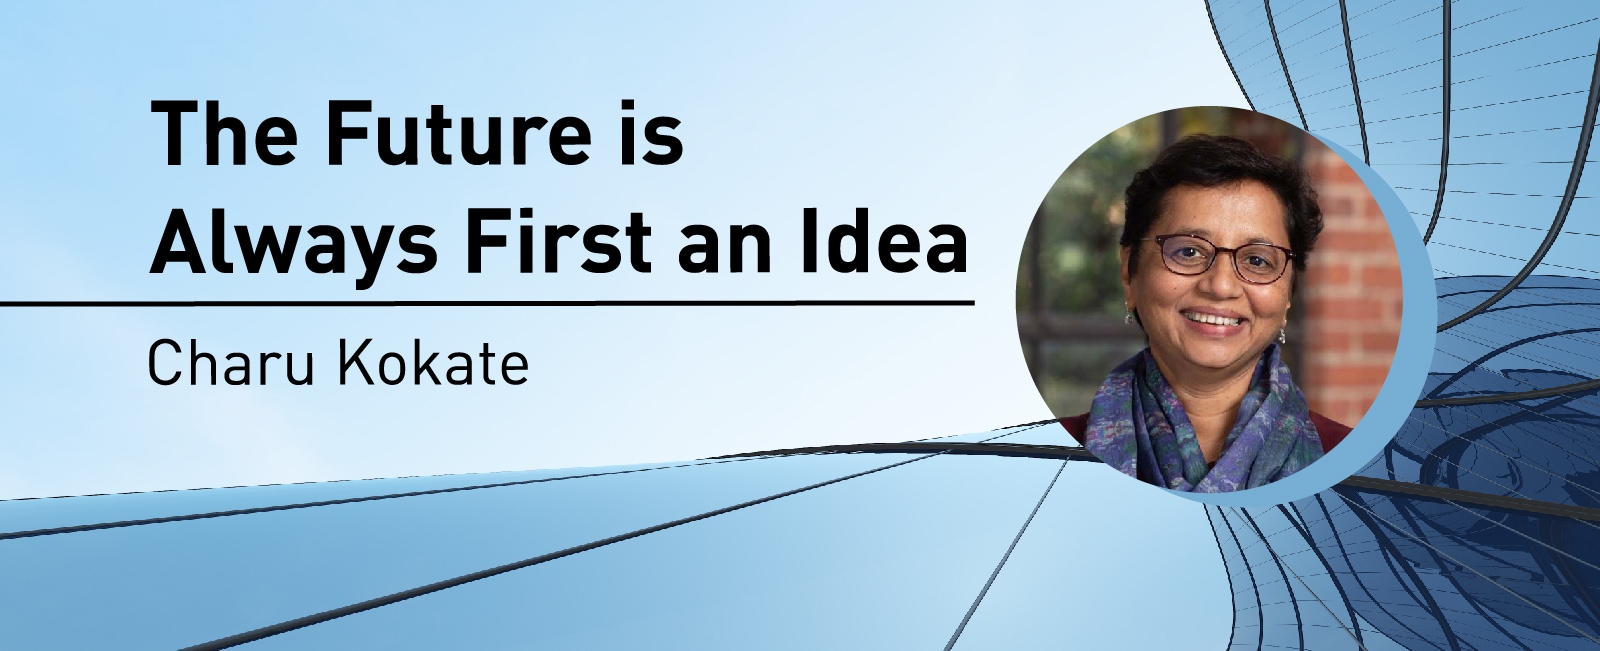 The Future is Always First an Idea - Charu Kokate